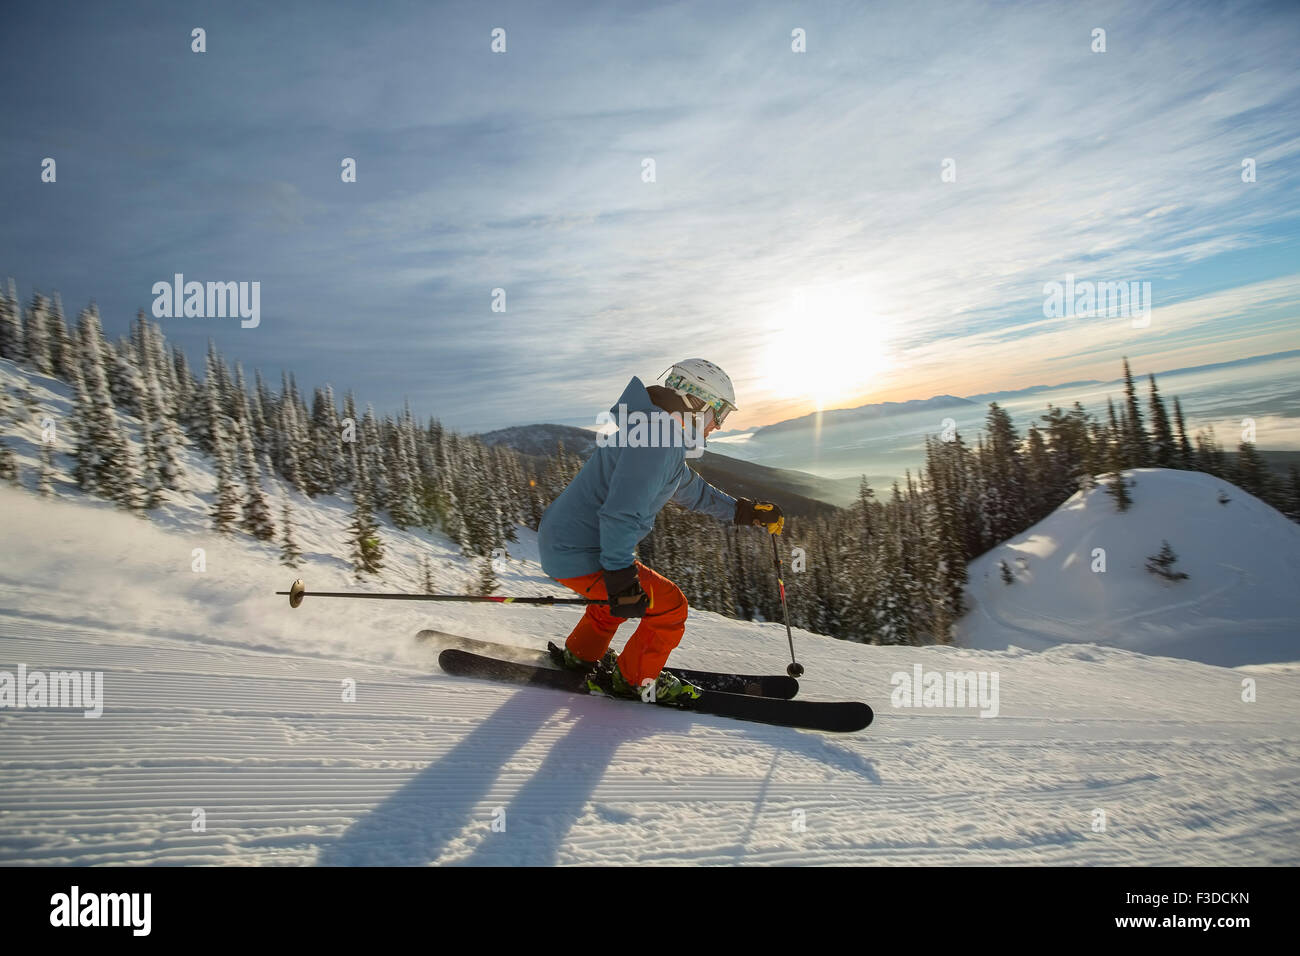 Mature man on ski slope at sunset Stock Photo